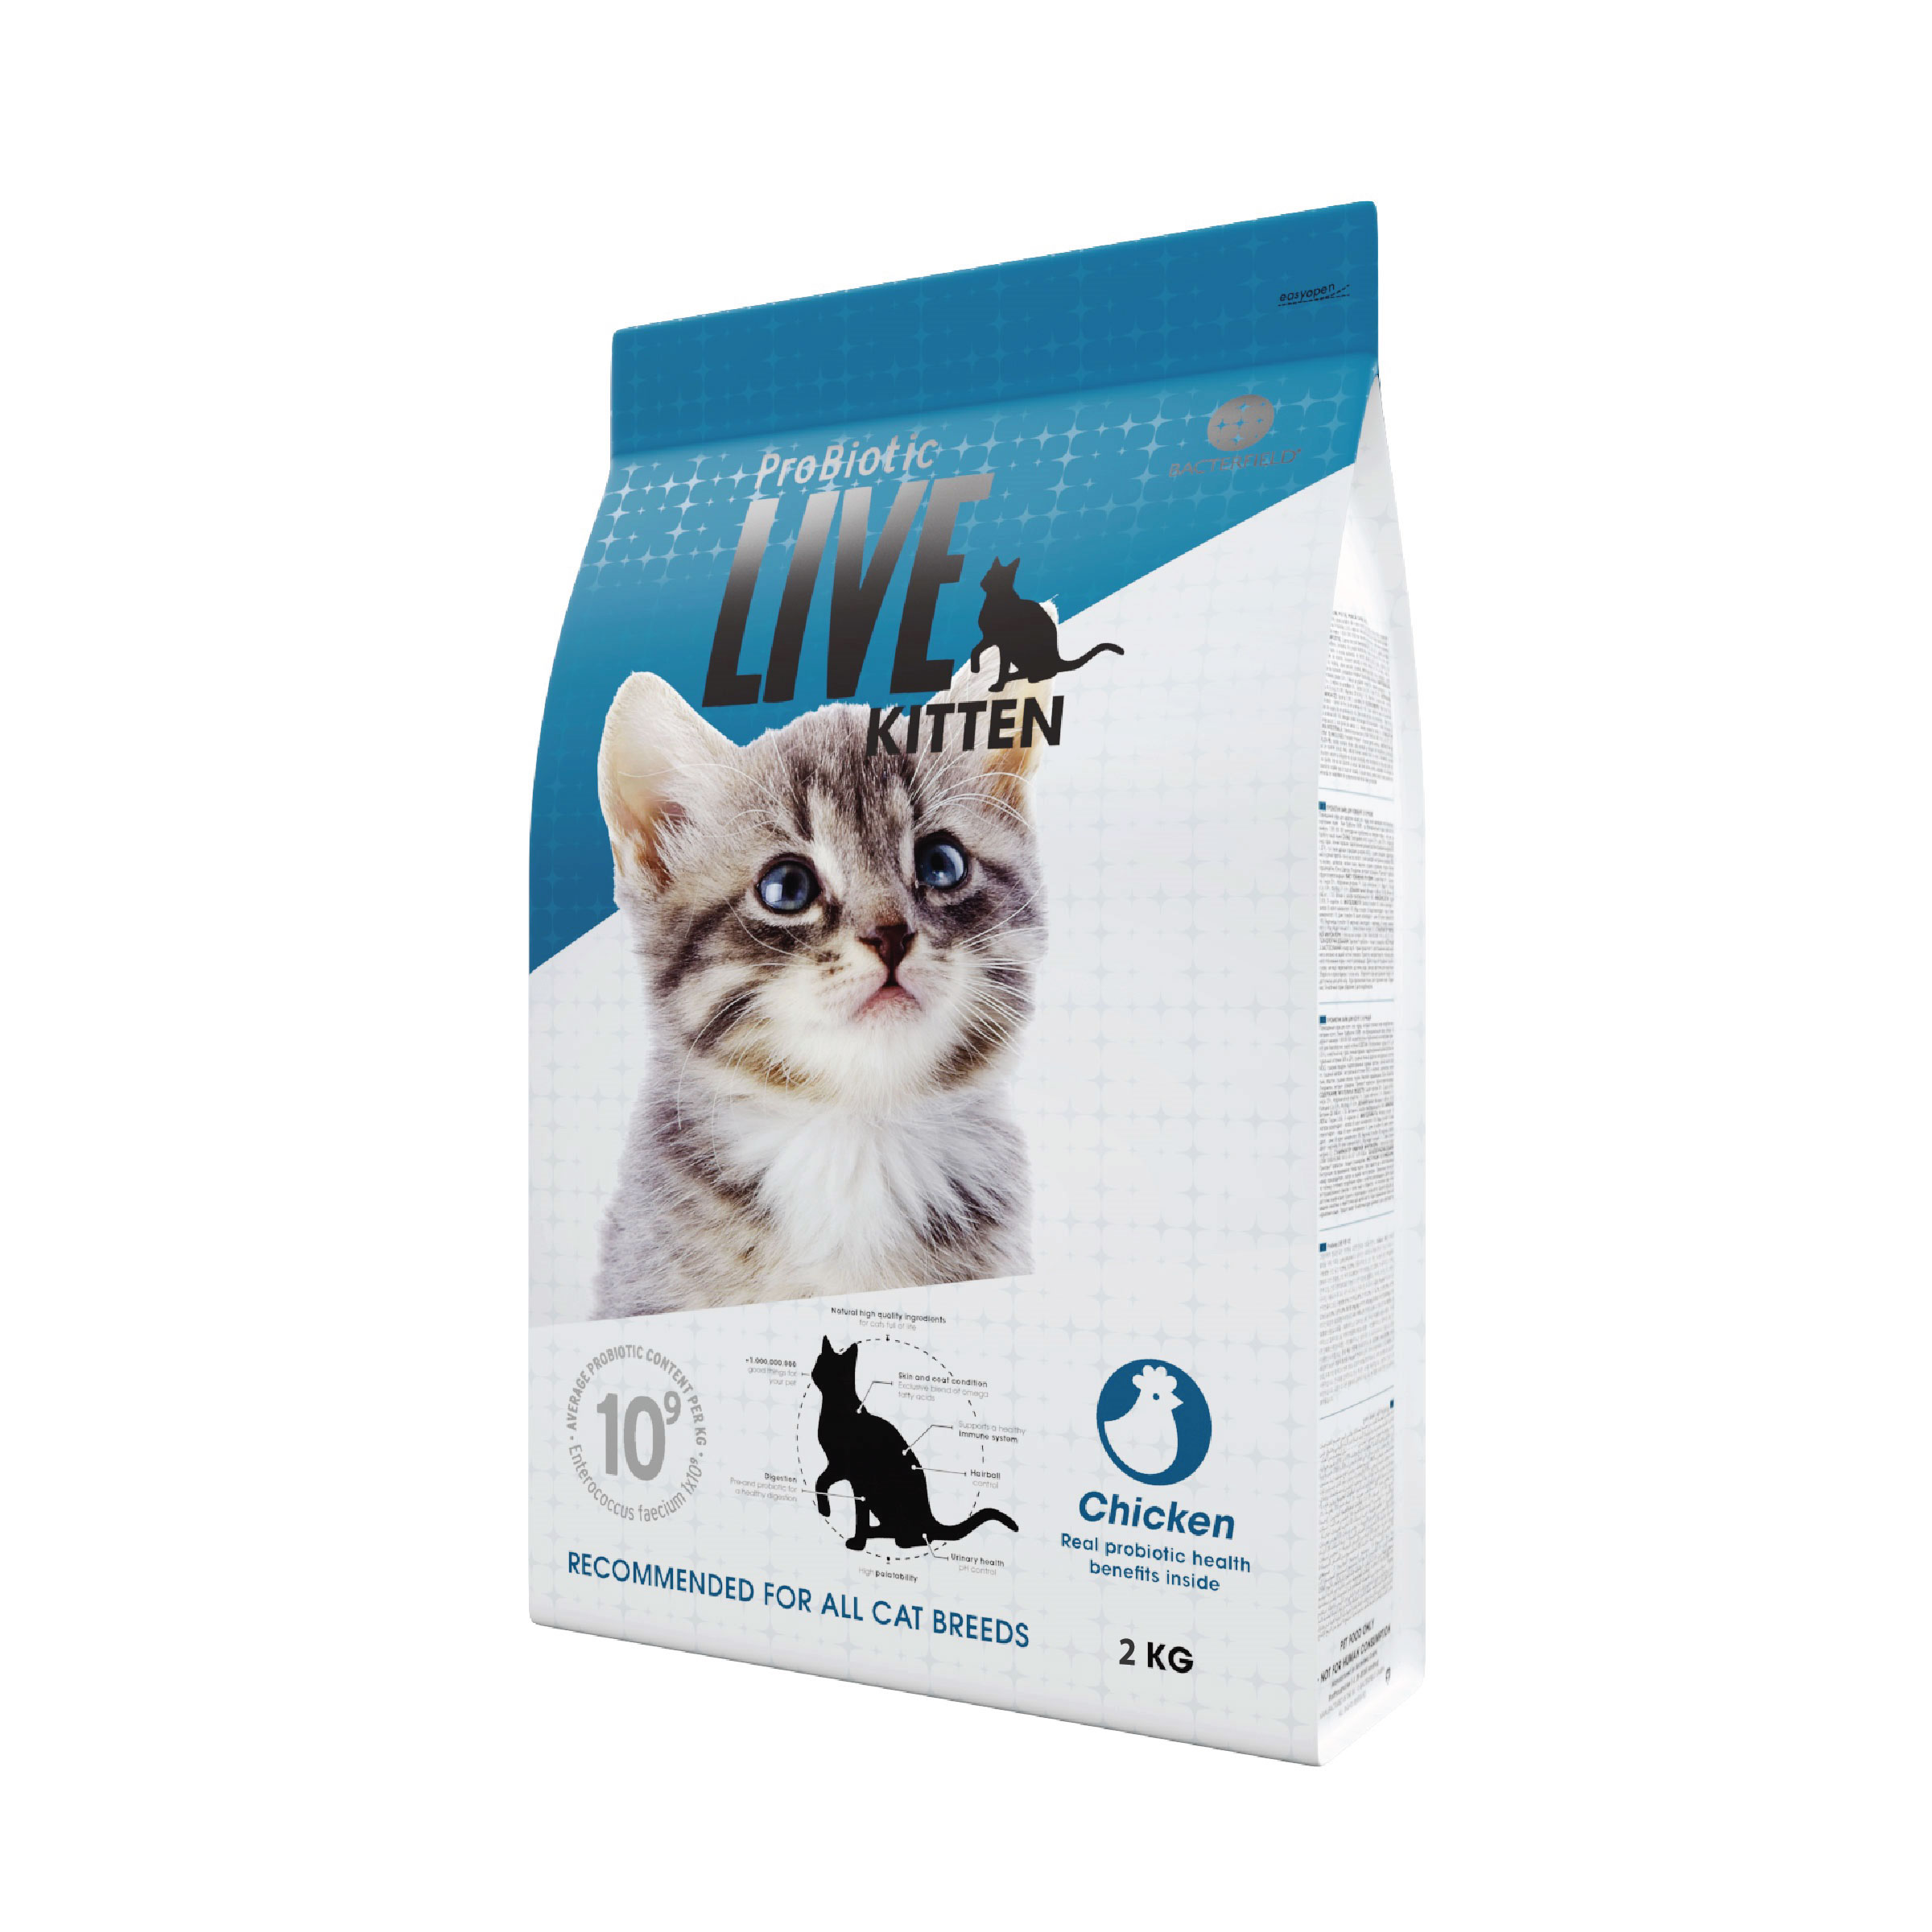 Probiotic Live Cat Food For Kitten